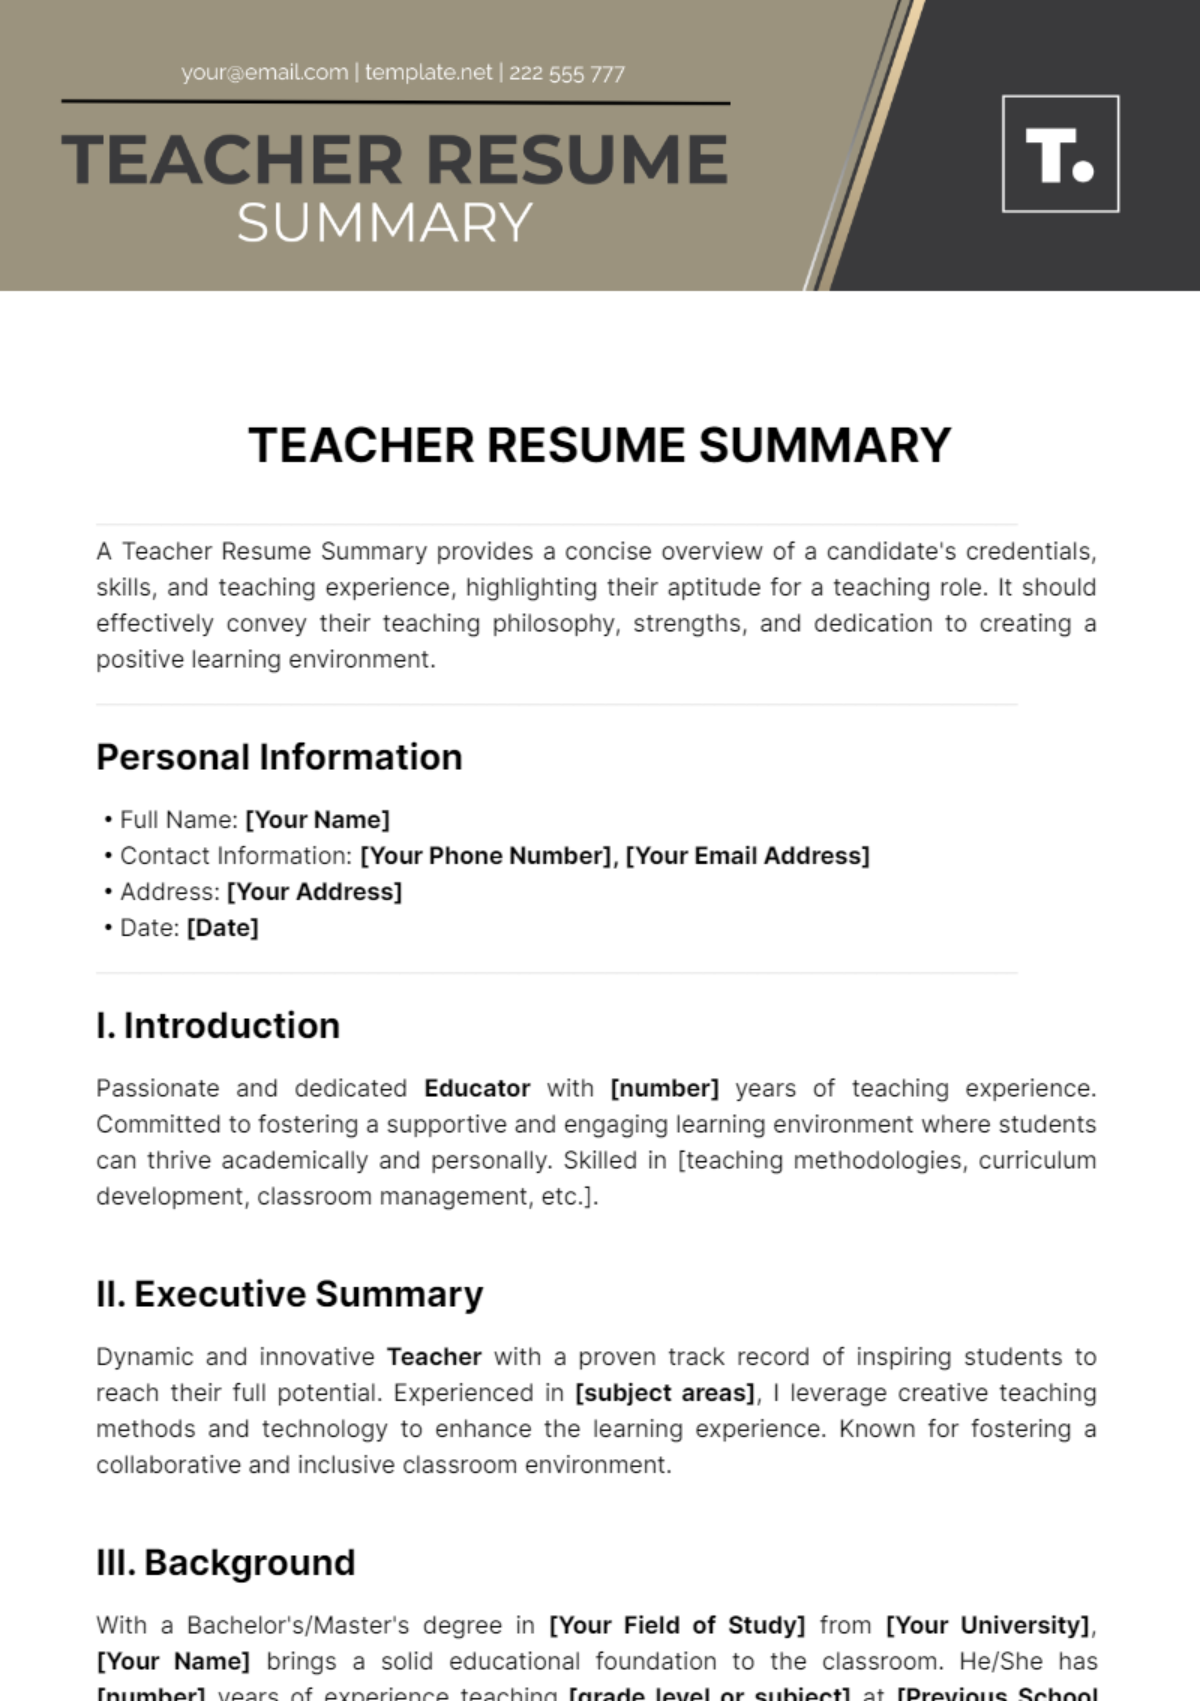 Free Teacher Resume Summary Template